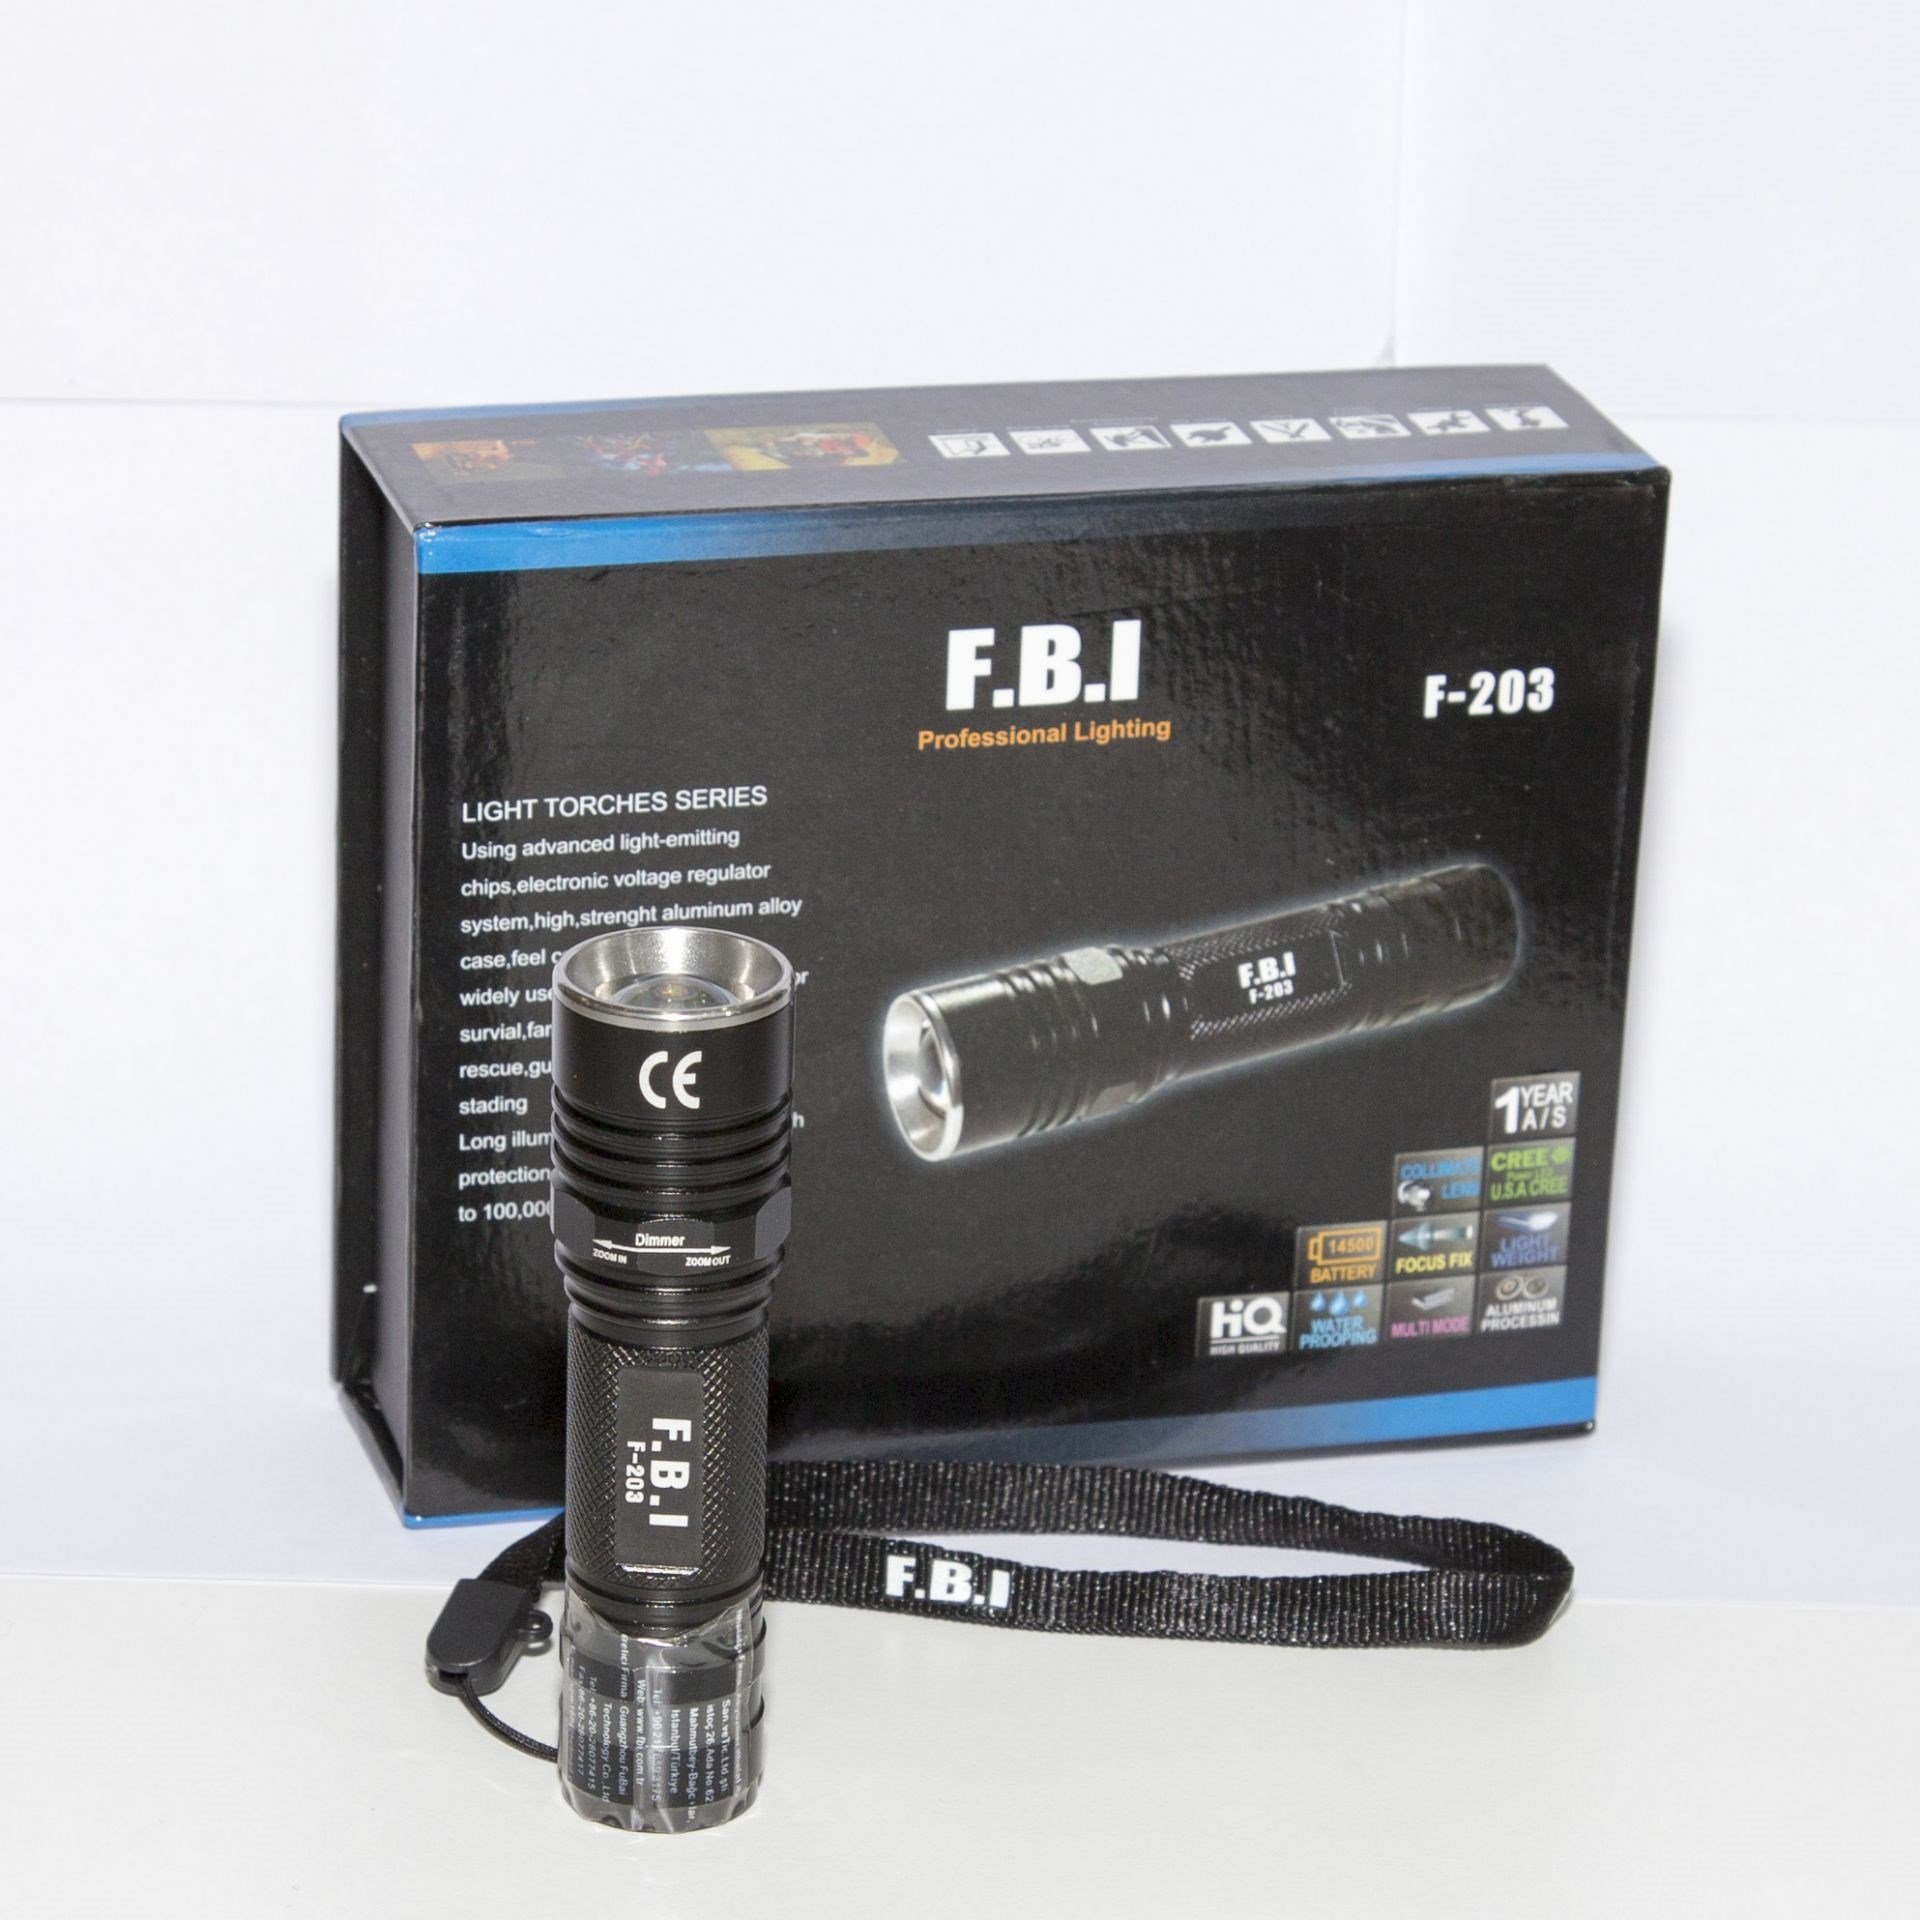 Pilci.com.tr | FBI F 203 PROFESSIONAL LIGHTING FENER Uygun Fiyat ve Firsat